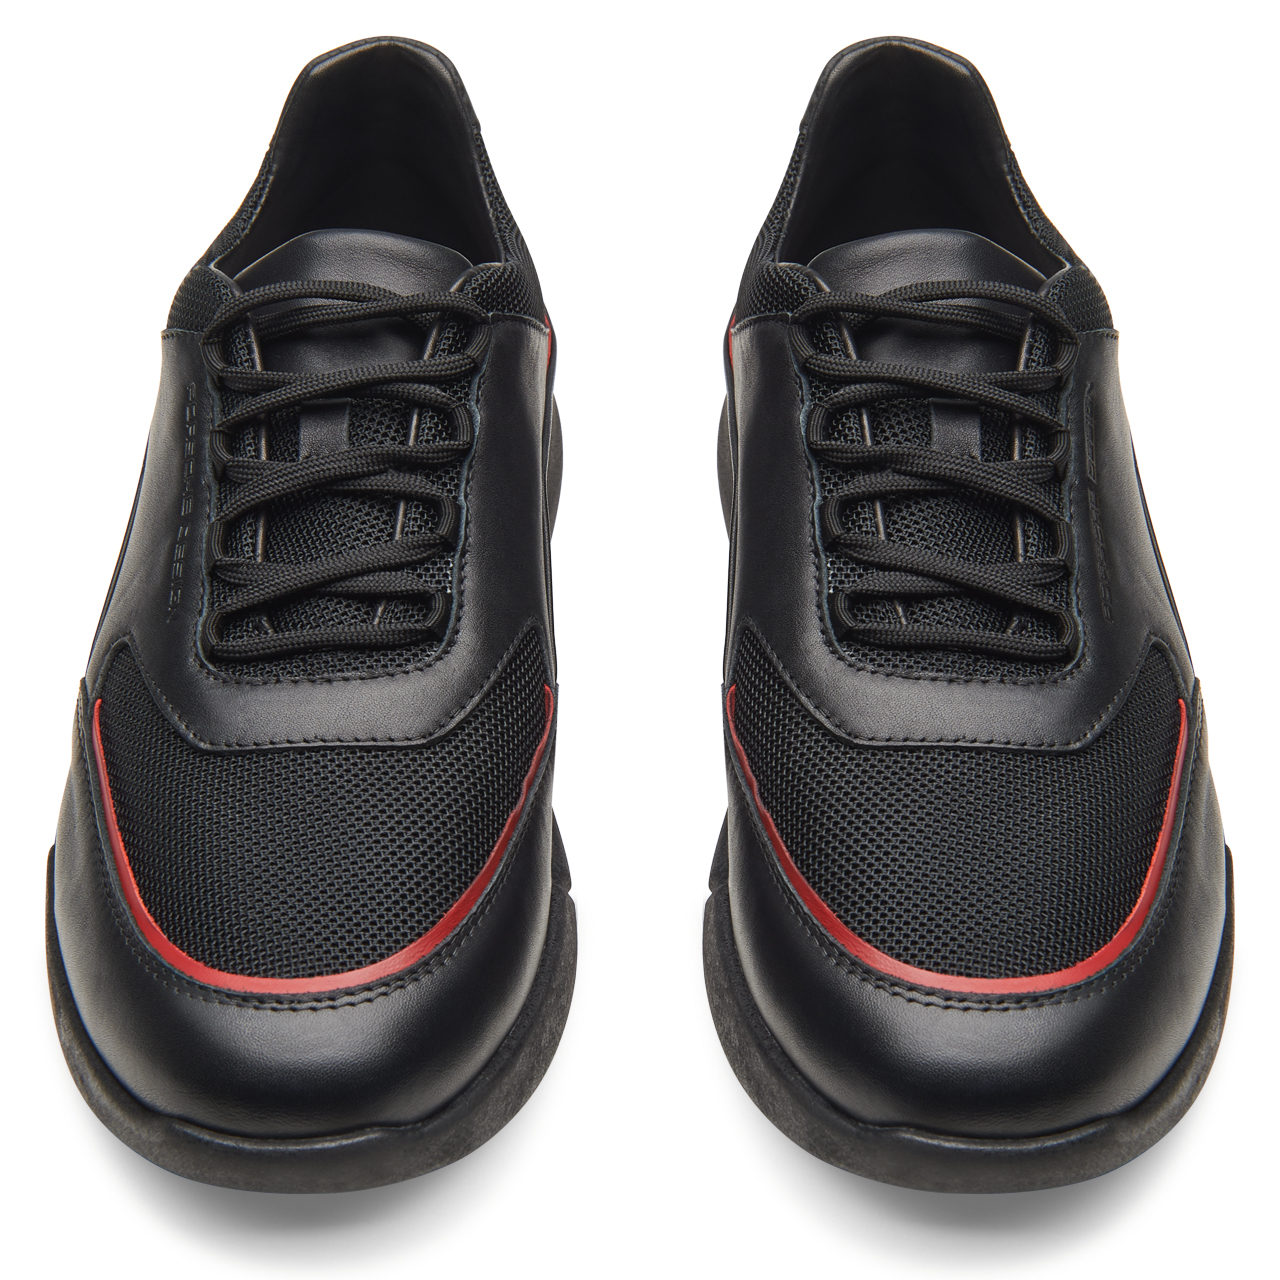 MetroRacer Calf Sneaker - Luxury Designer Shoes | Porsche Design ...